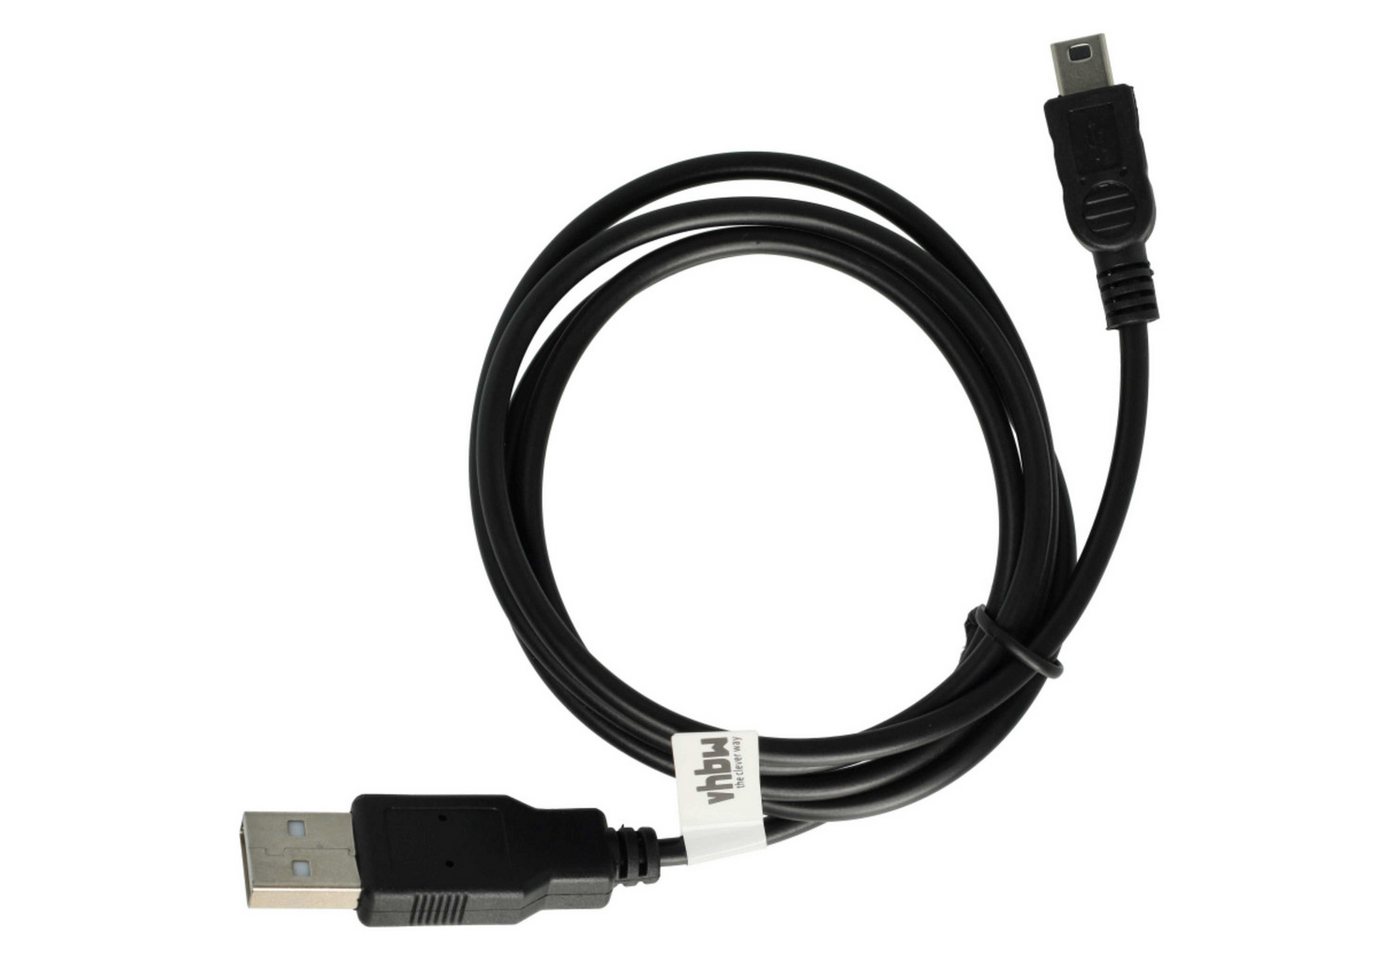 vhbw passend für Sony MiniDV DCR-HC90E, DCR-HC85E, DCR-HC85 Kamera / USB-Kabel von vhbw